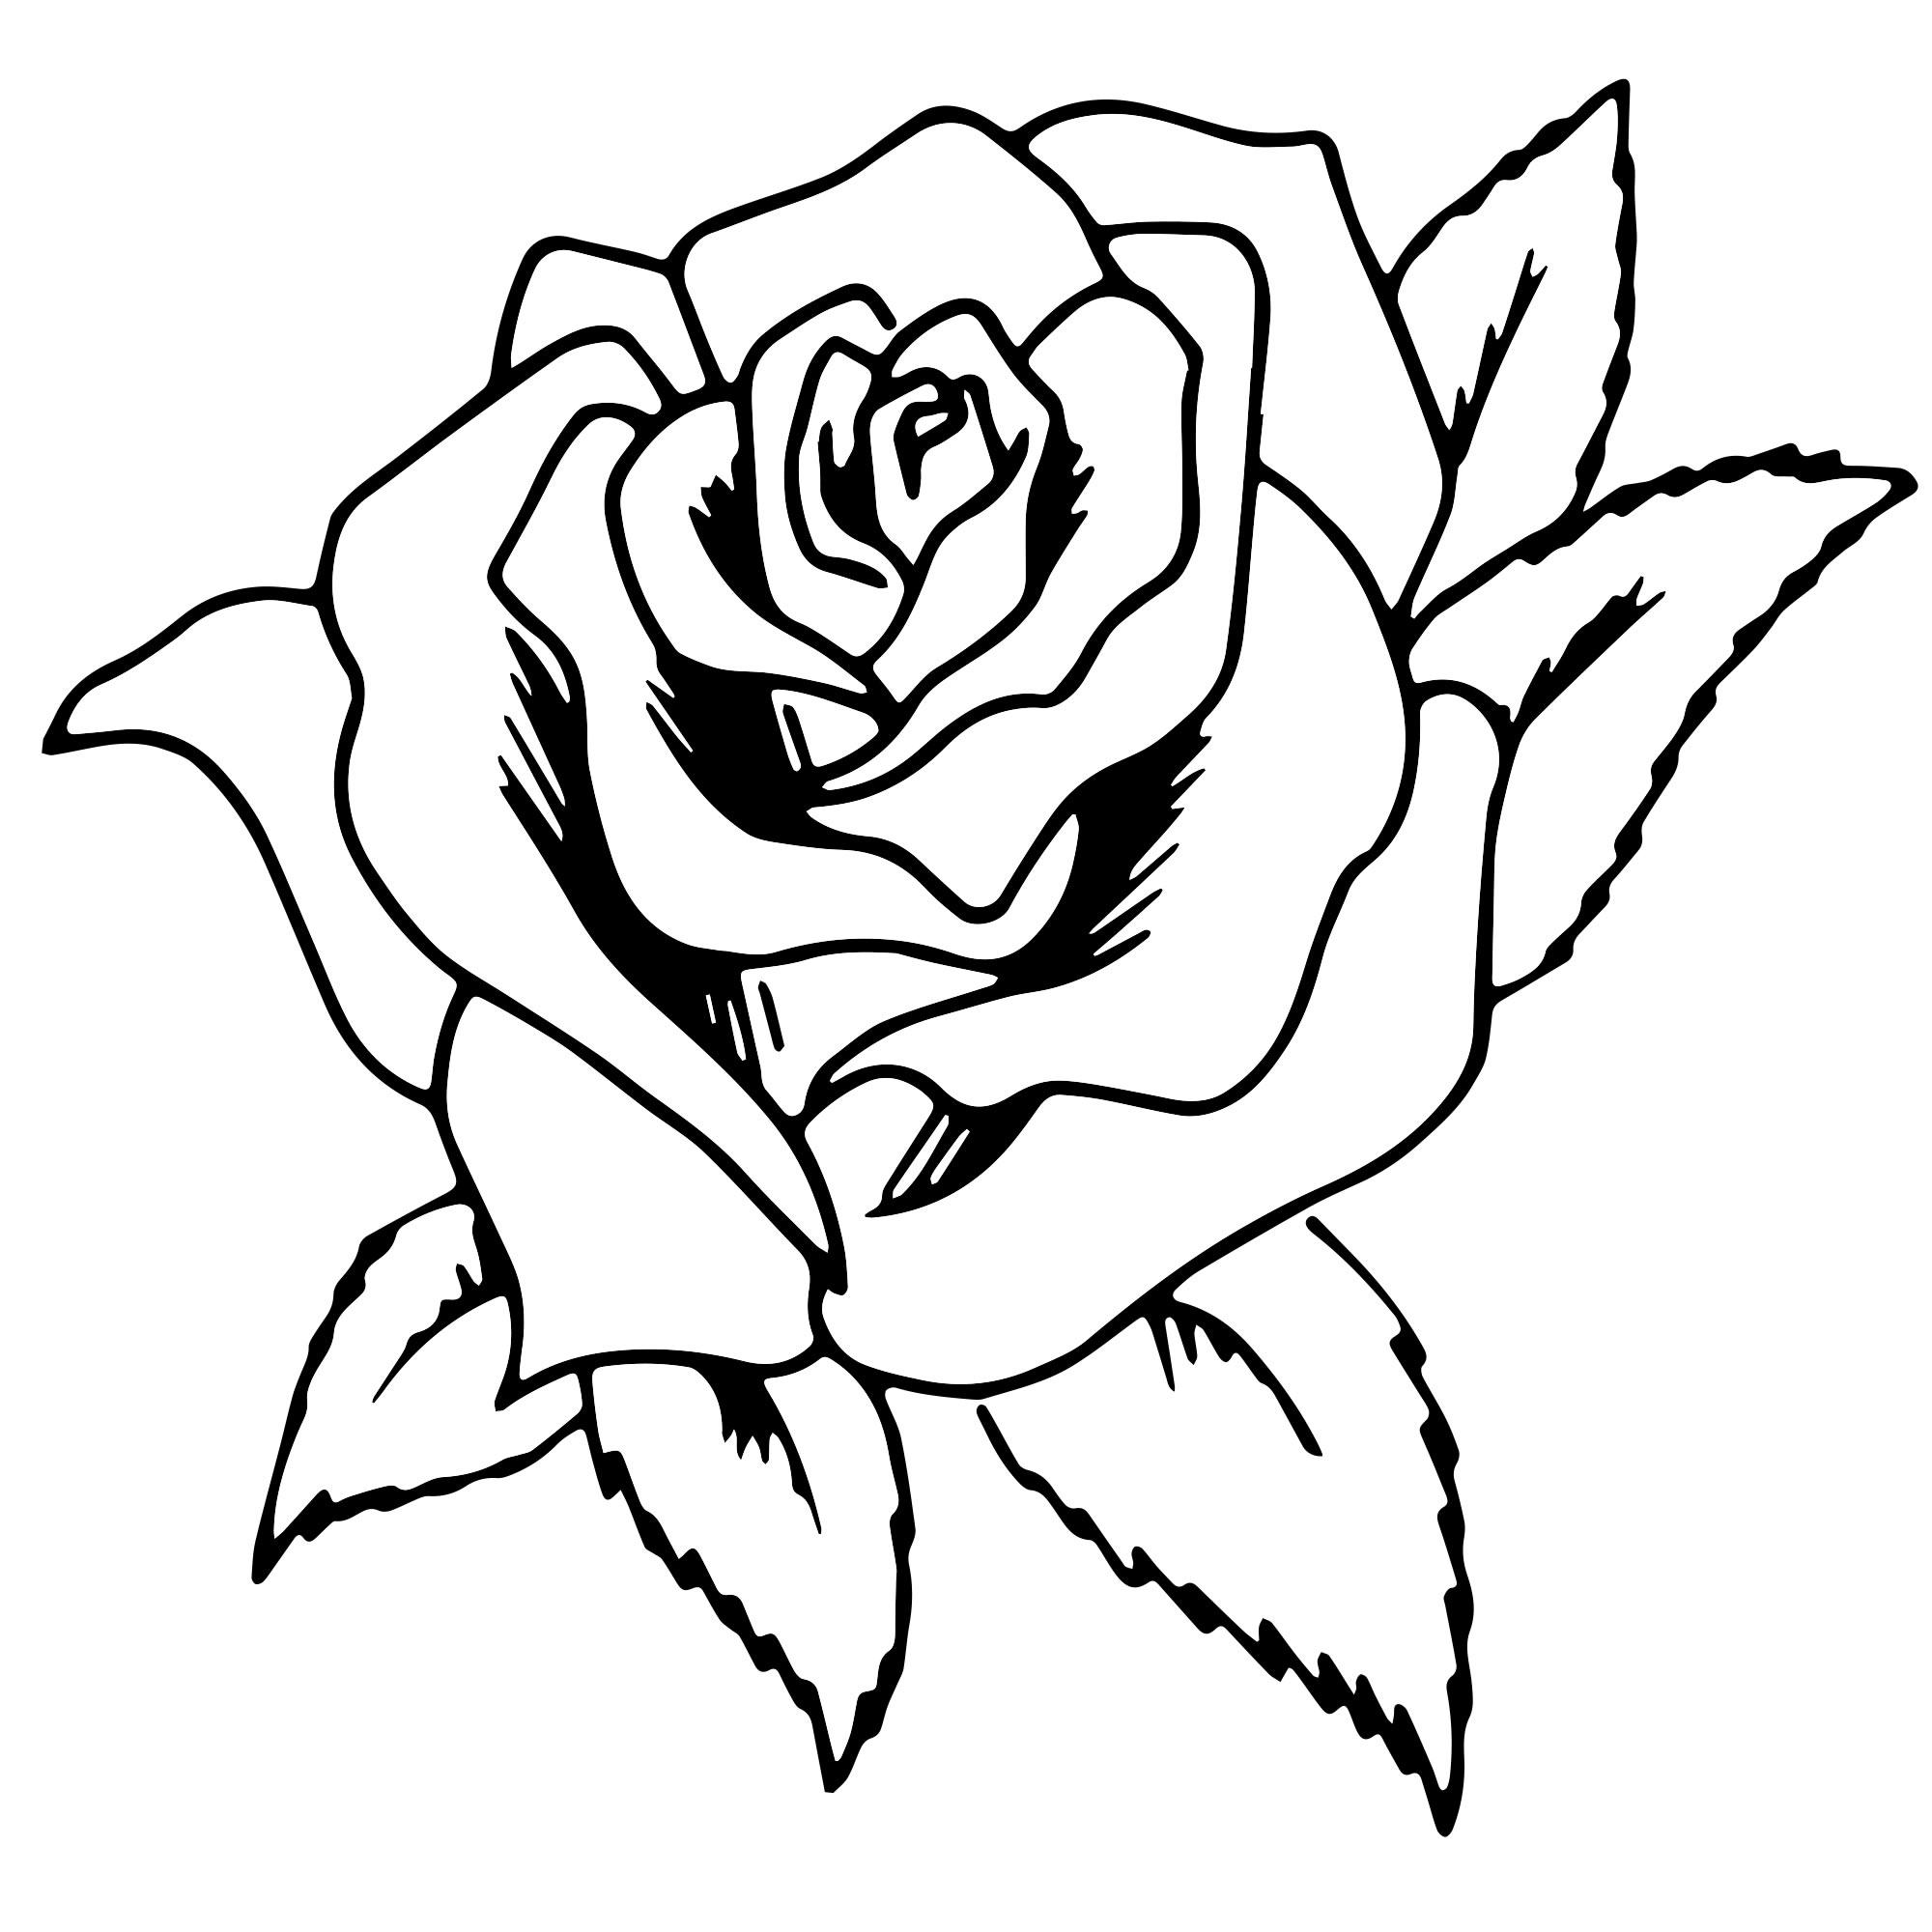 Раскраска цветы розы